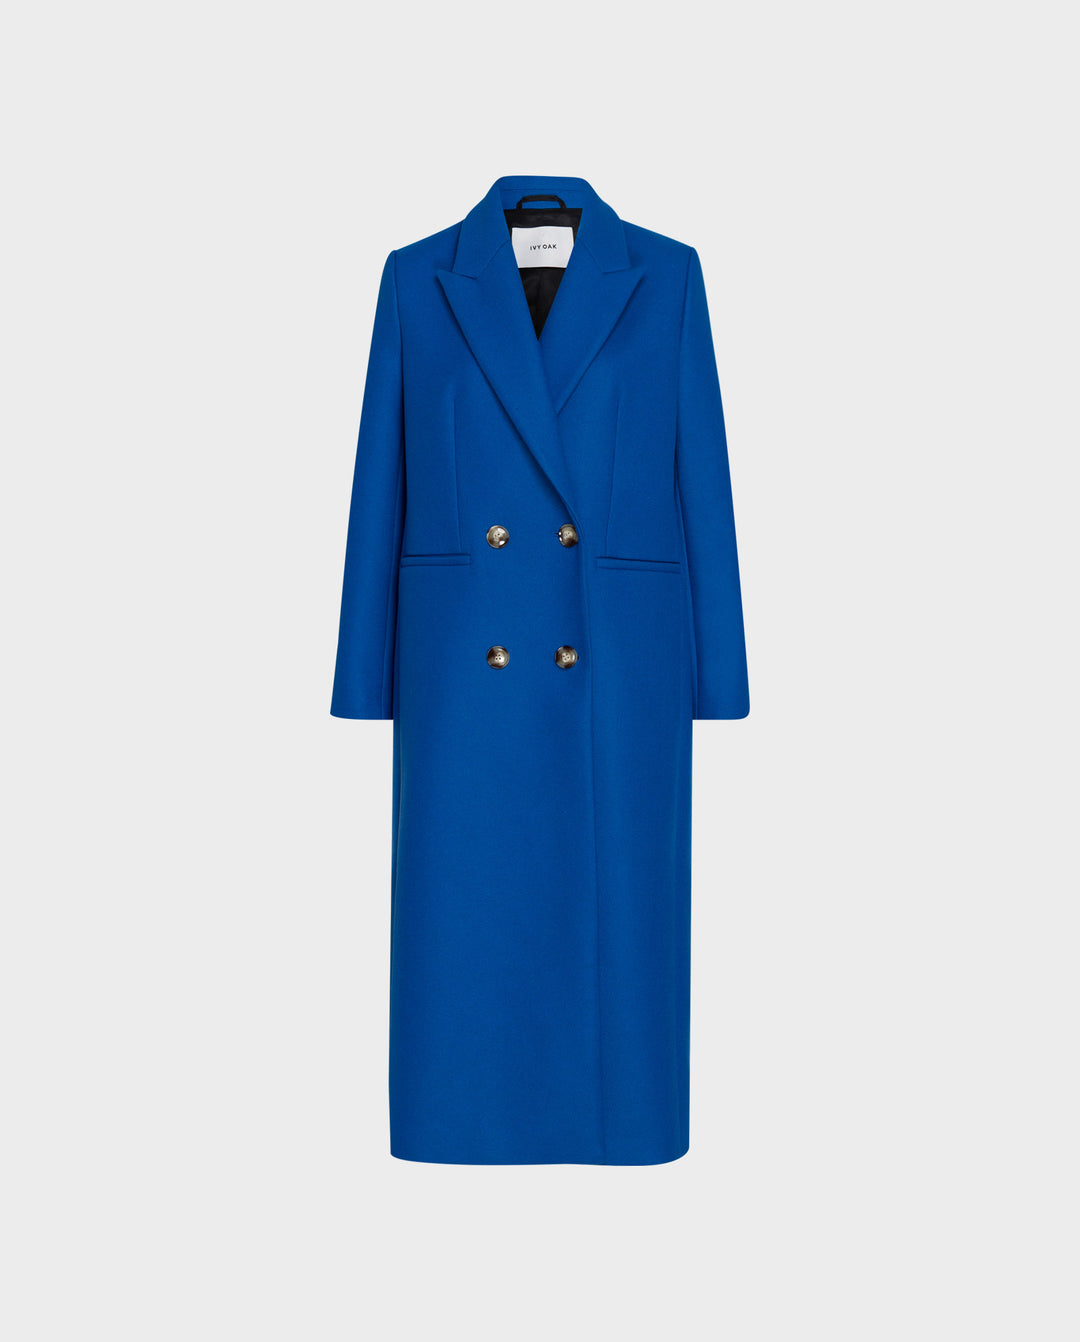 Cindy boxy coat in cobalt blue